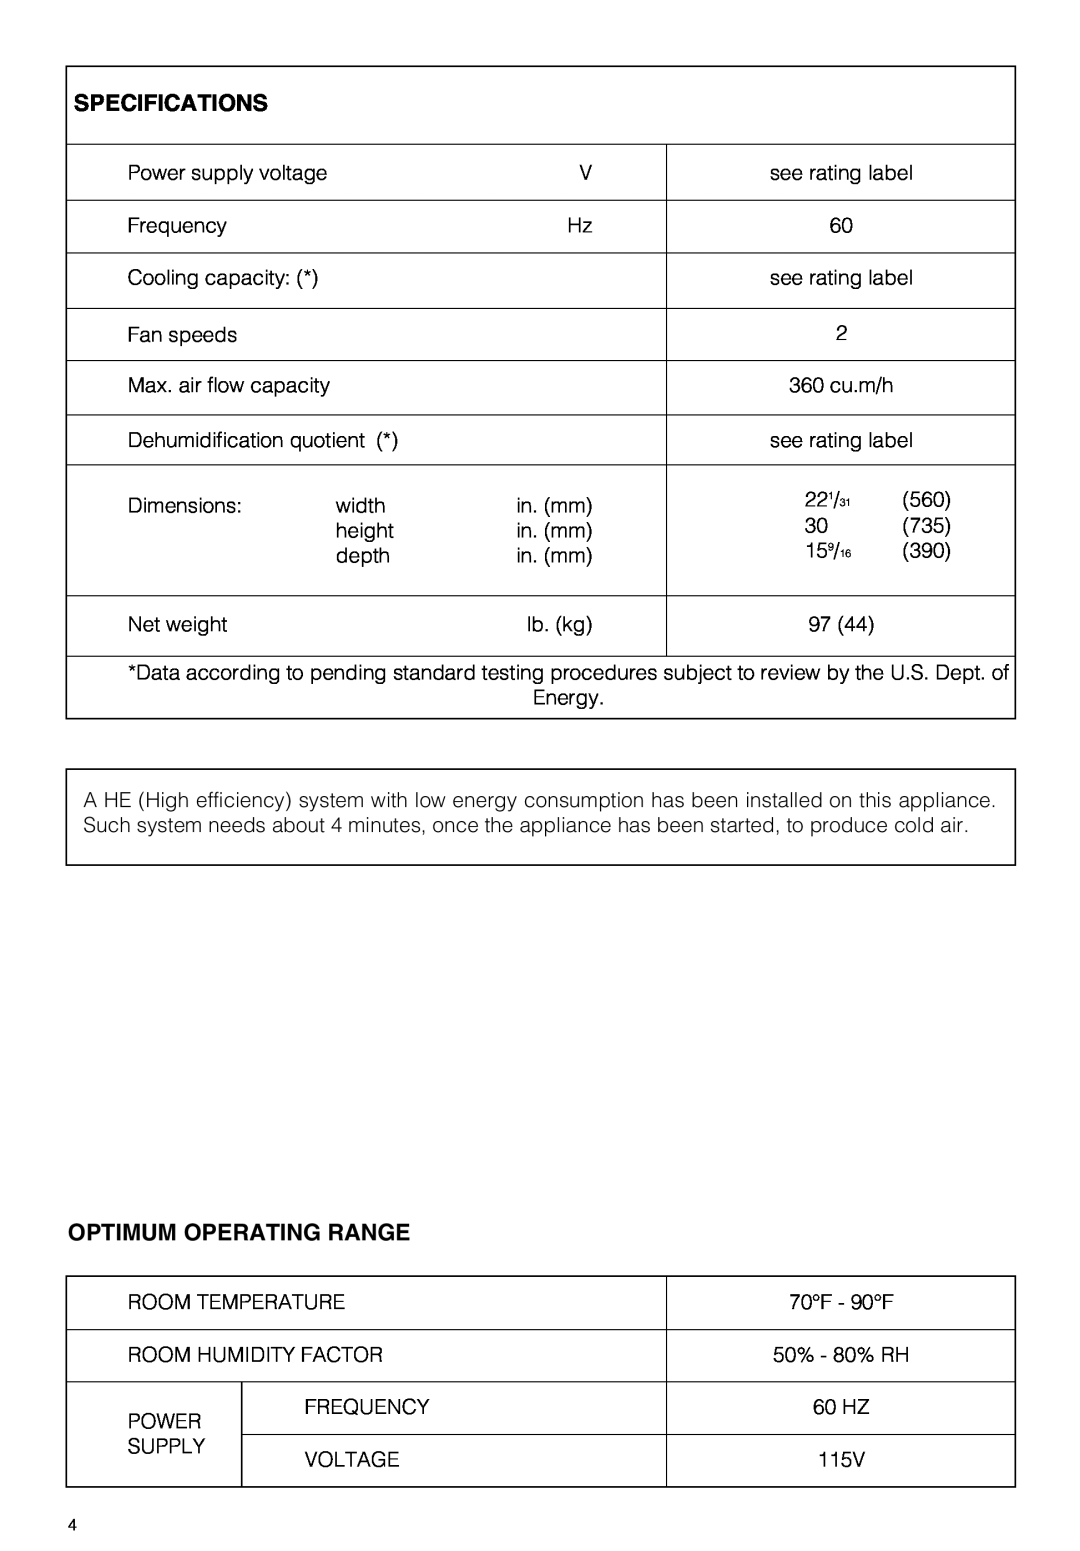 DeLonghi PAC 210 U owner manual Specifications, Optimum Operating Range 